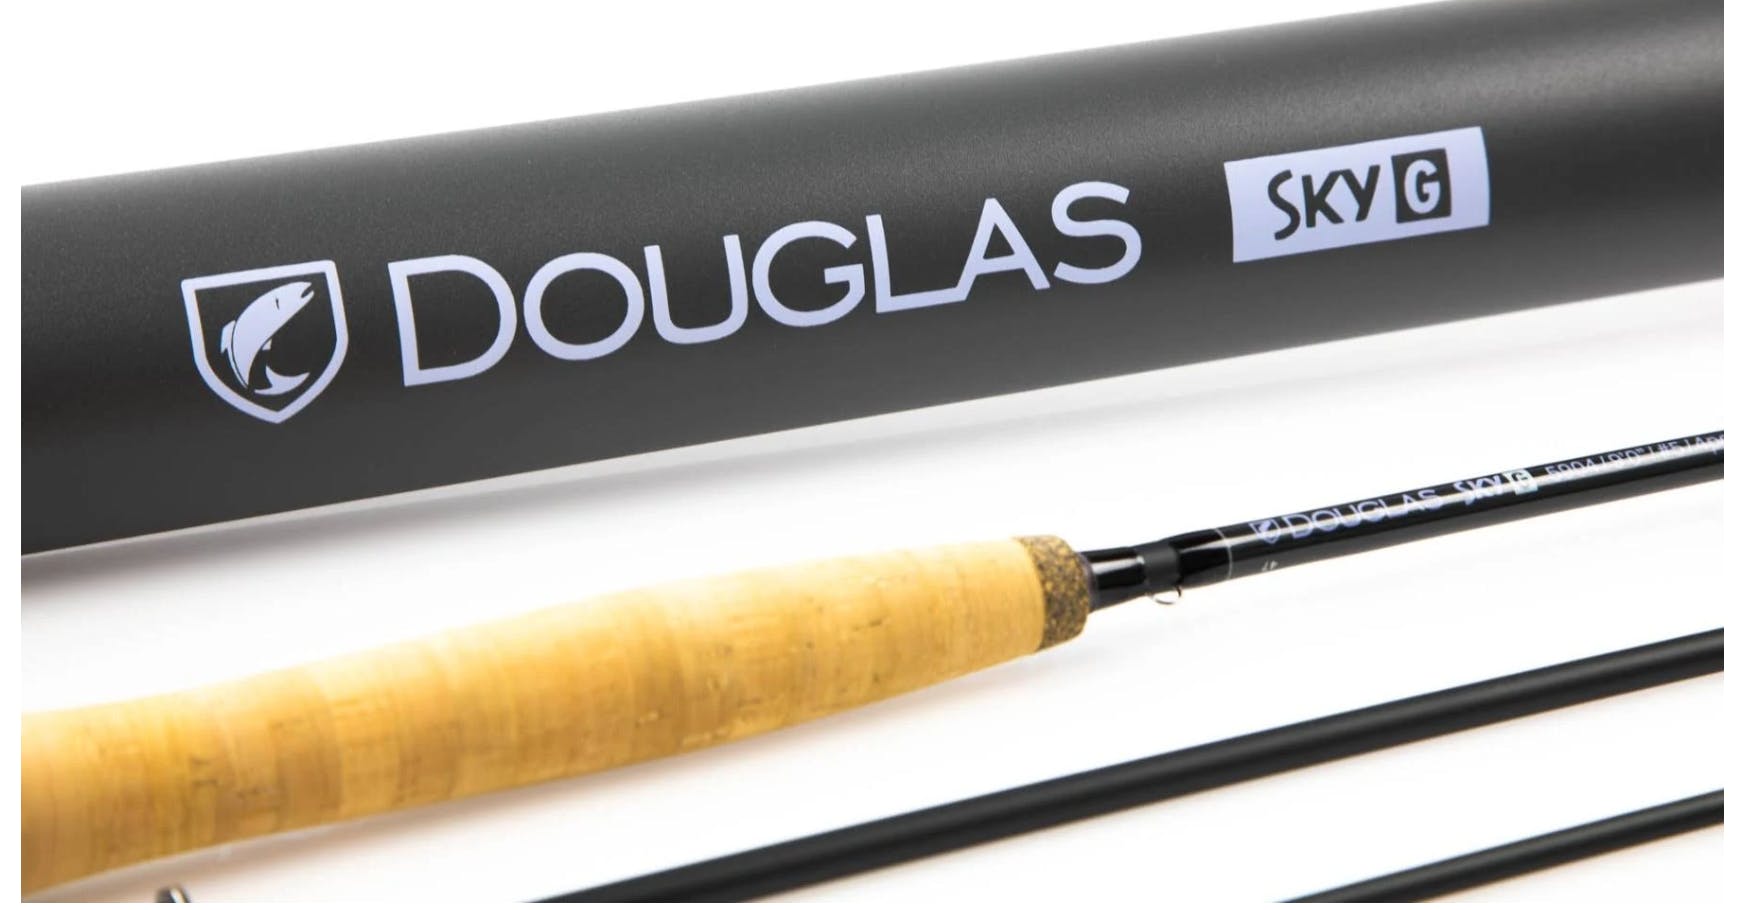 The Douglas Sky G Rod. 